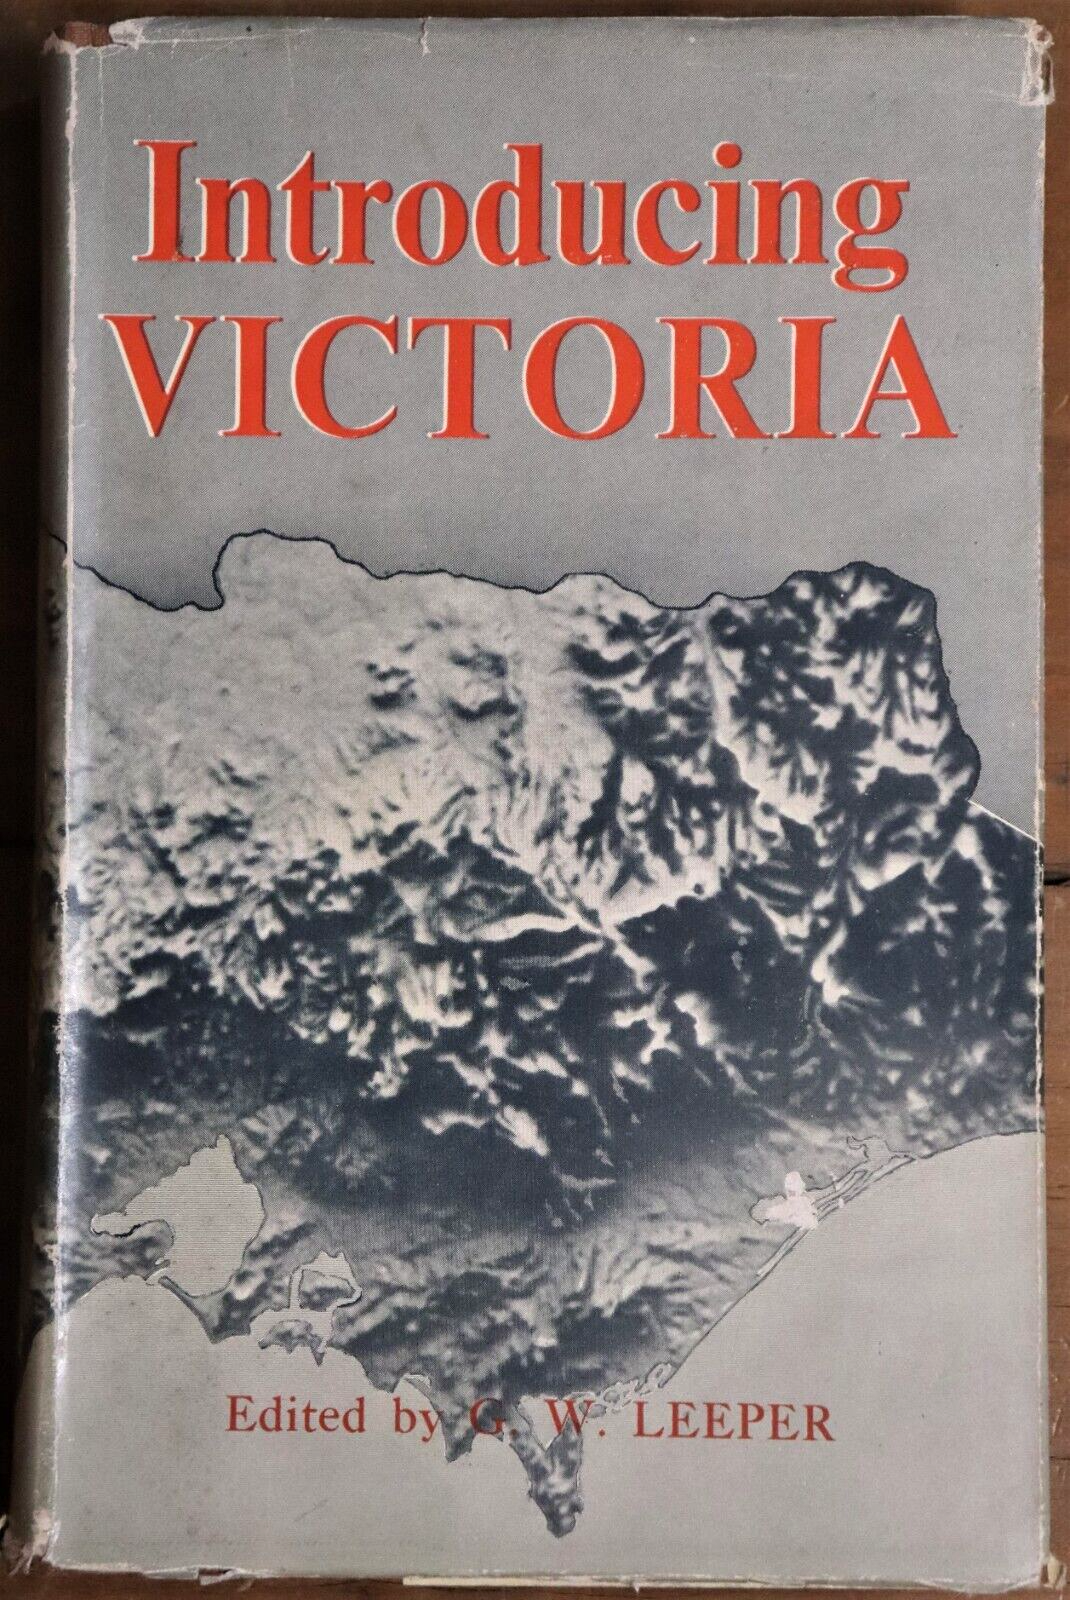 Introducing Victoria by GW Leeper - 1955 - Australian History Book